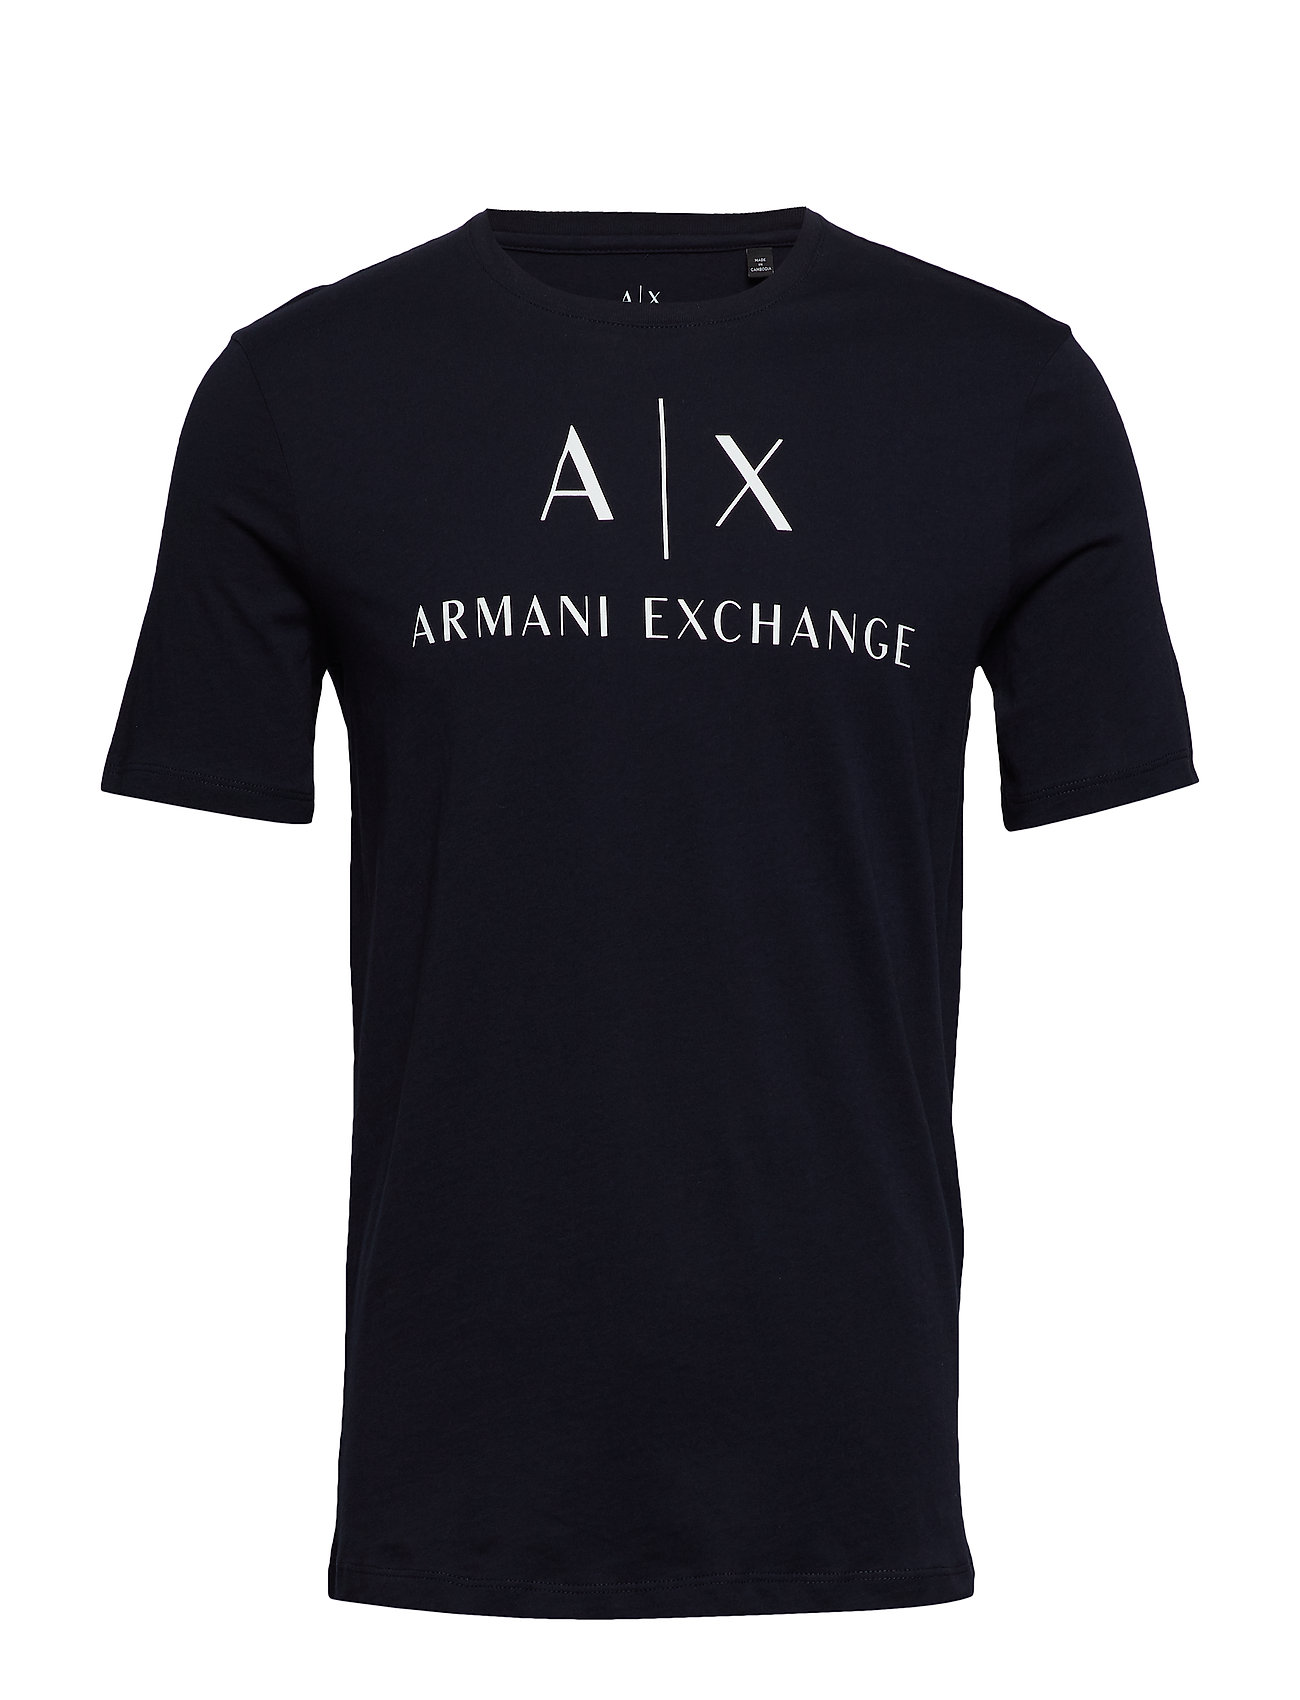 armani exchange men tshirt